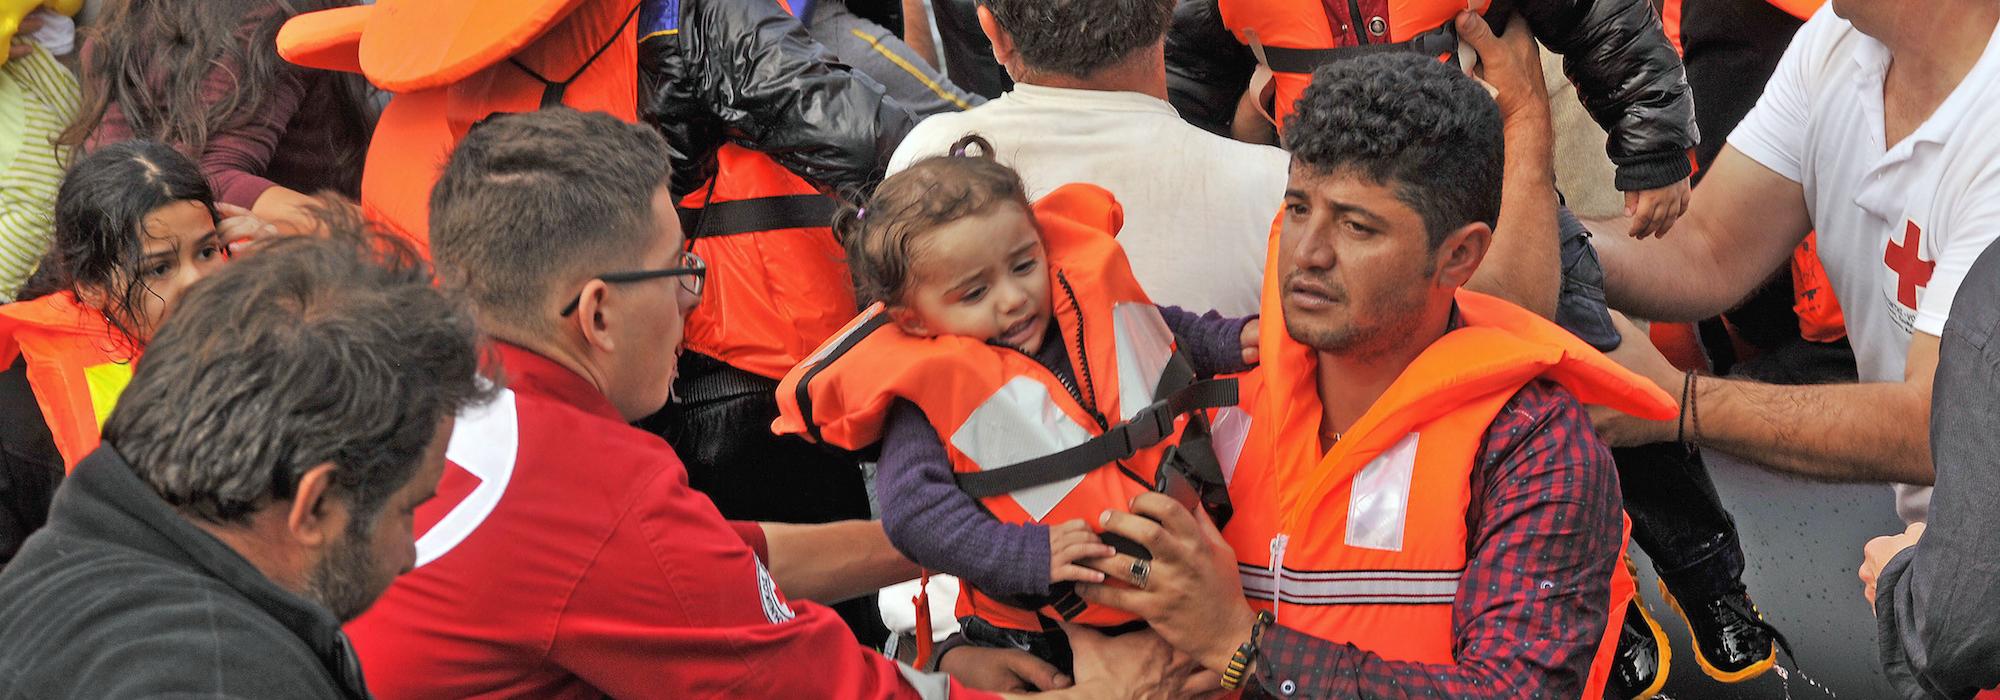 Syrian refugees arrive in Lesvos, Greece in October.